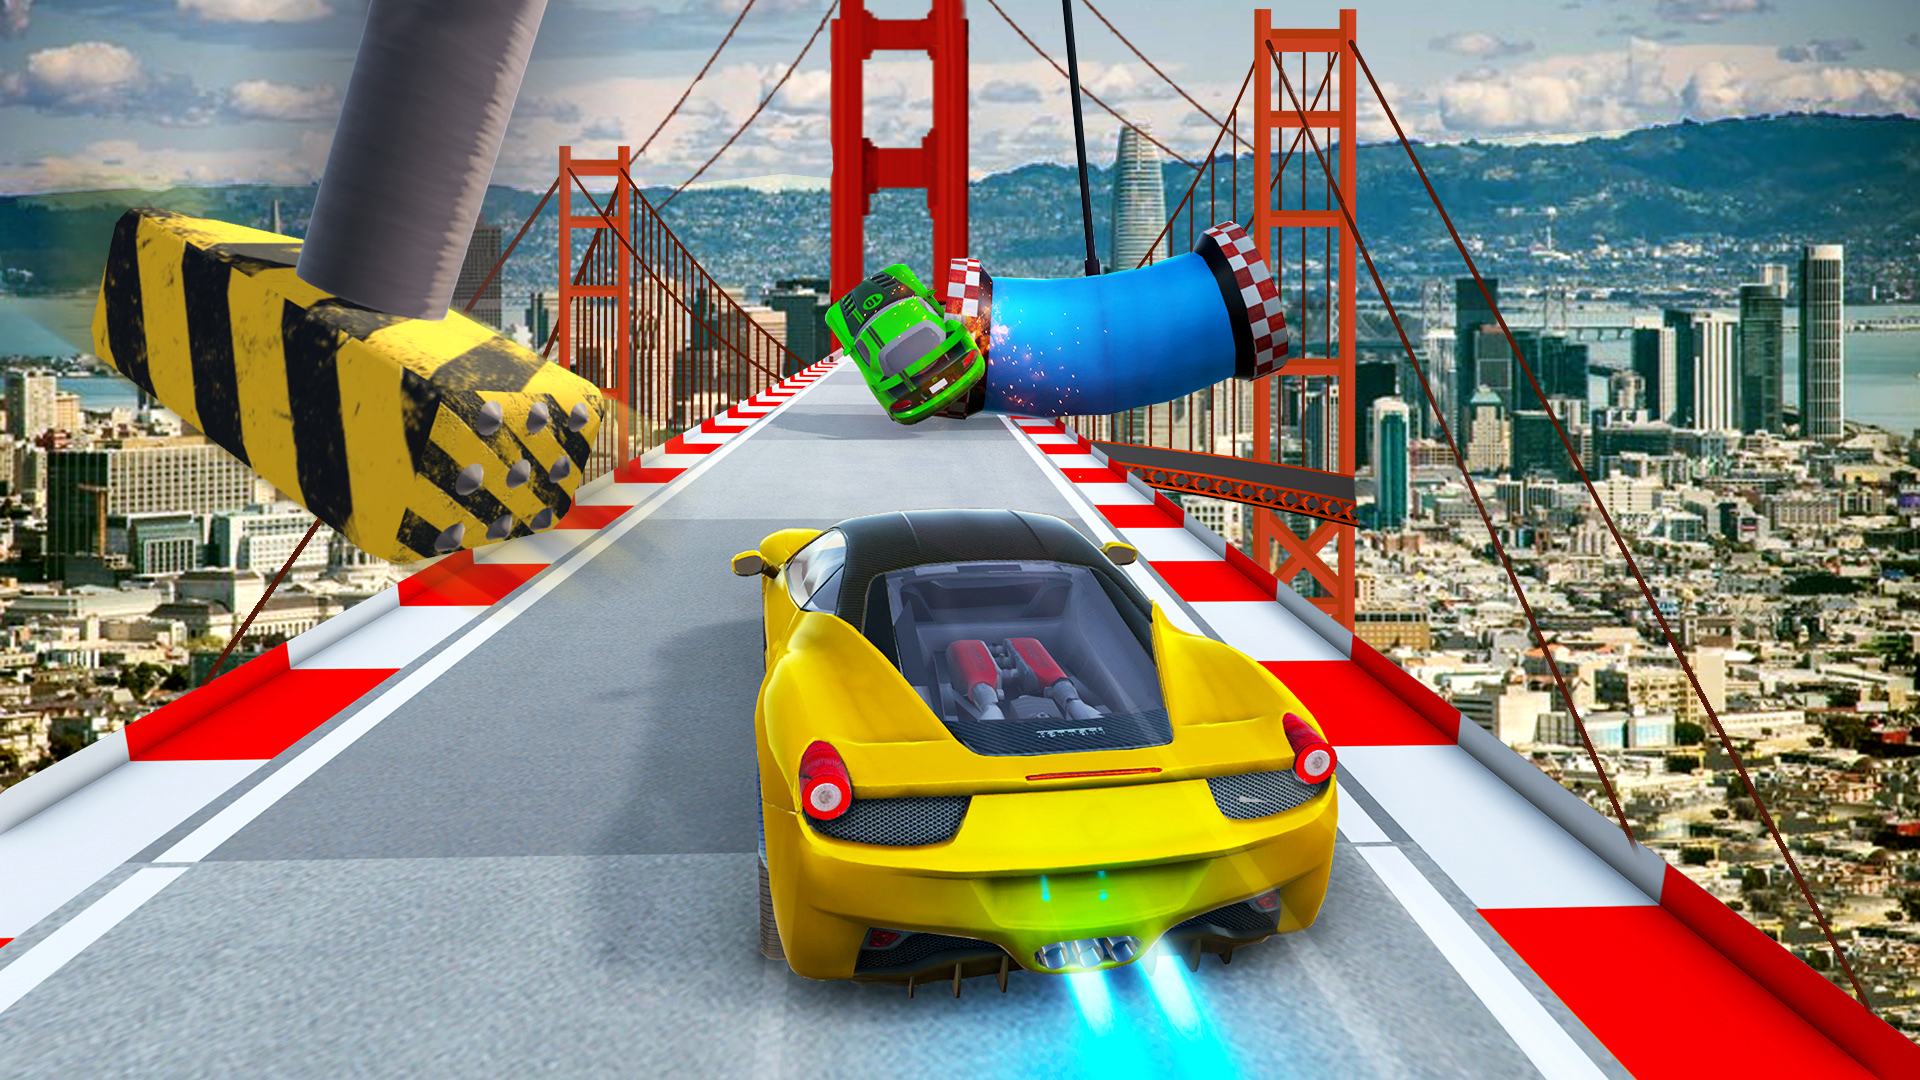 Download do APK de Jogo de Carro de Corrida GT 3D para Android